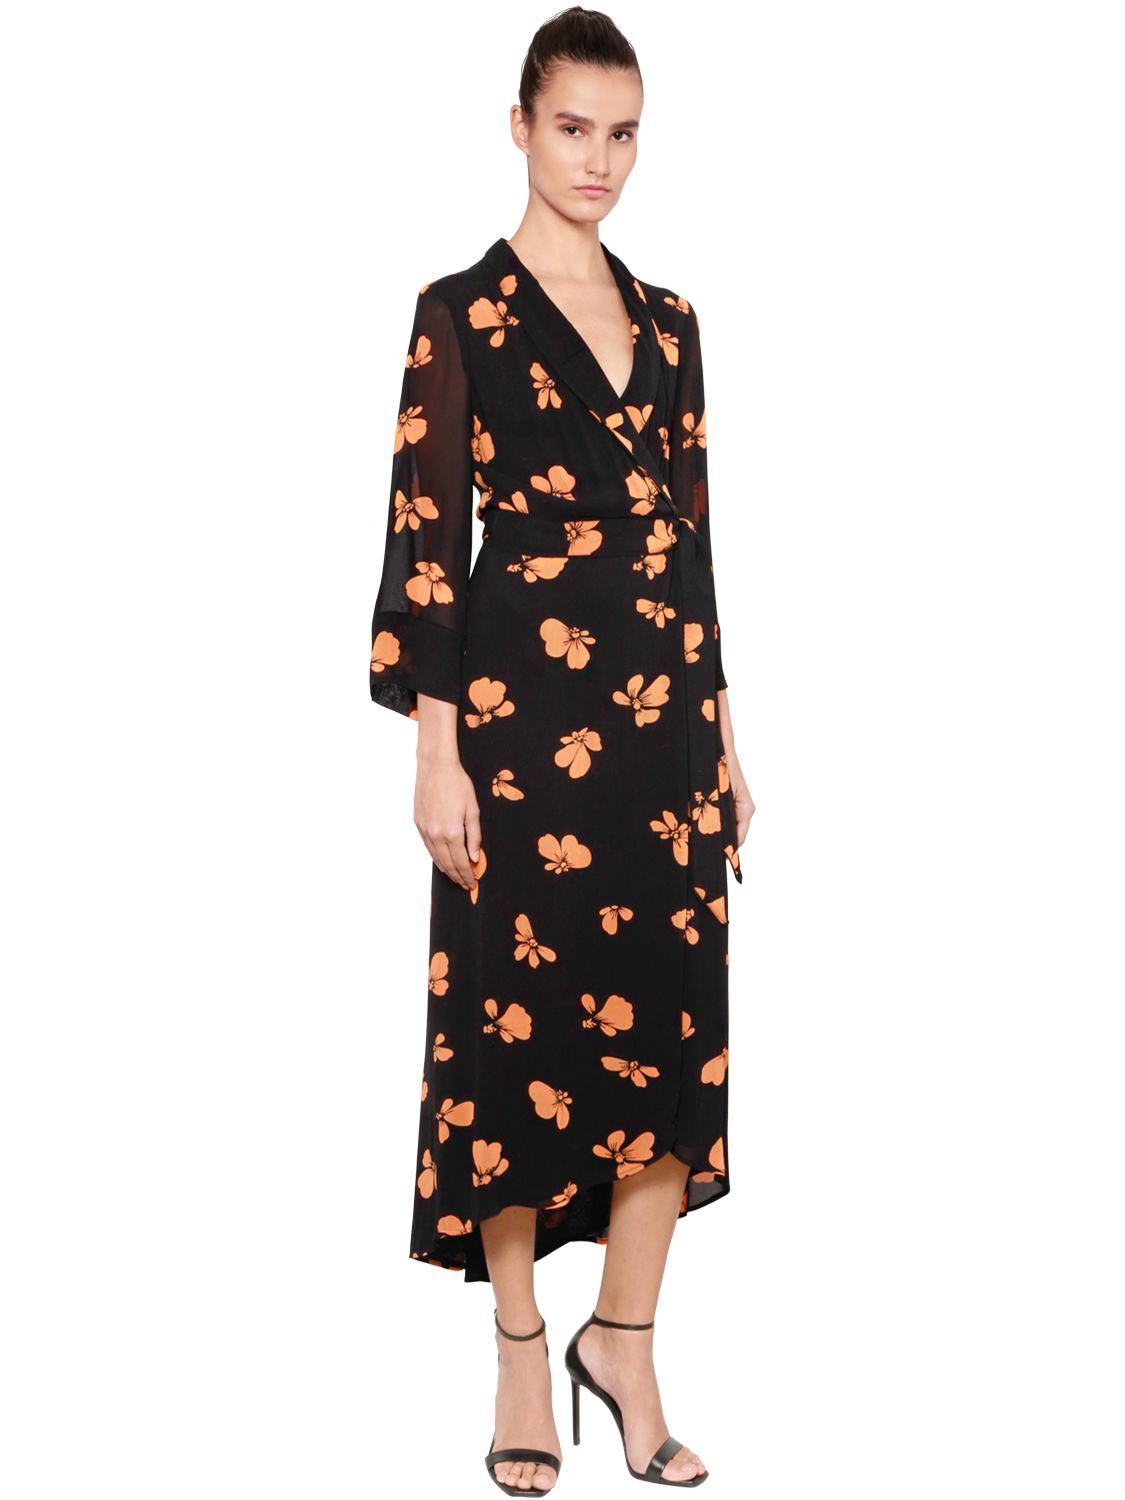 Ganni Floral Printed Crepe Wrap Dress in Black/Orange (Black) - Lyst